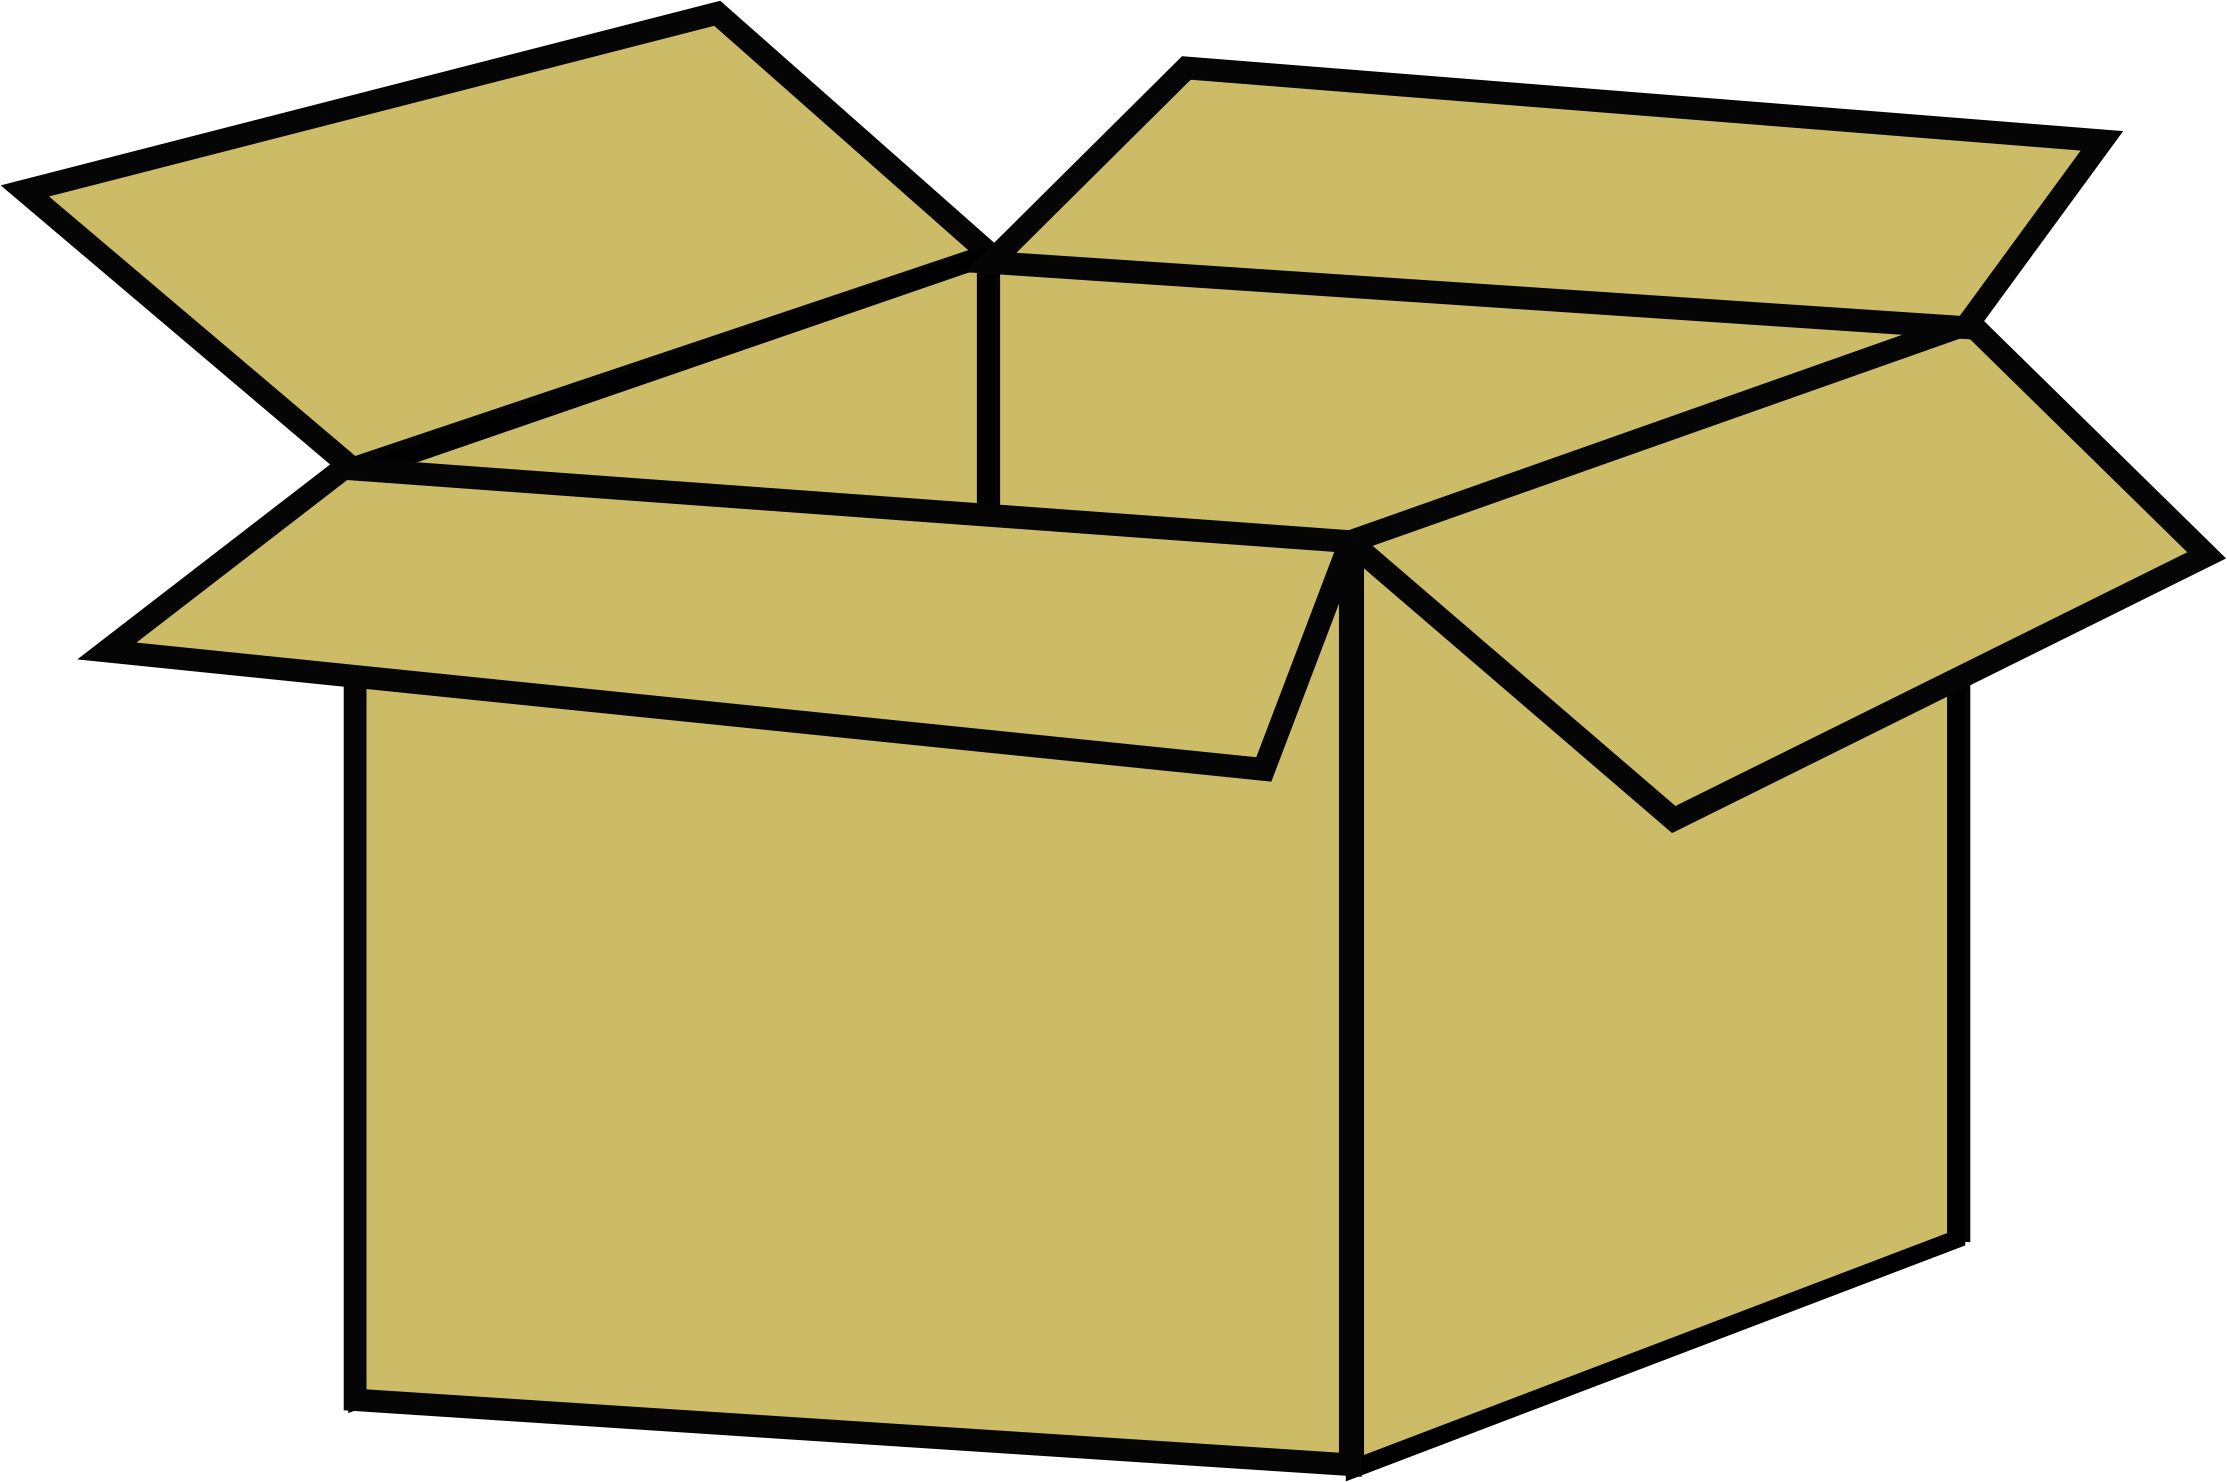 clipart box cardboard box